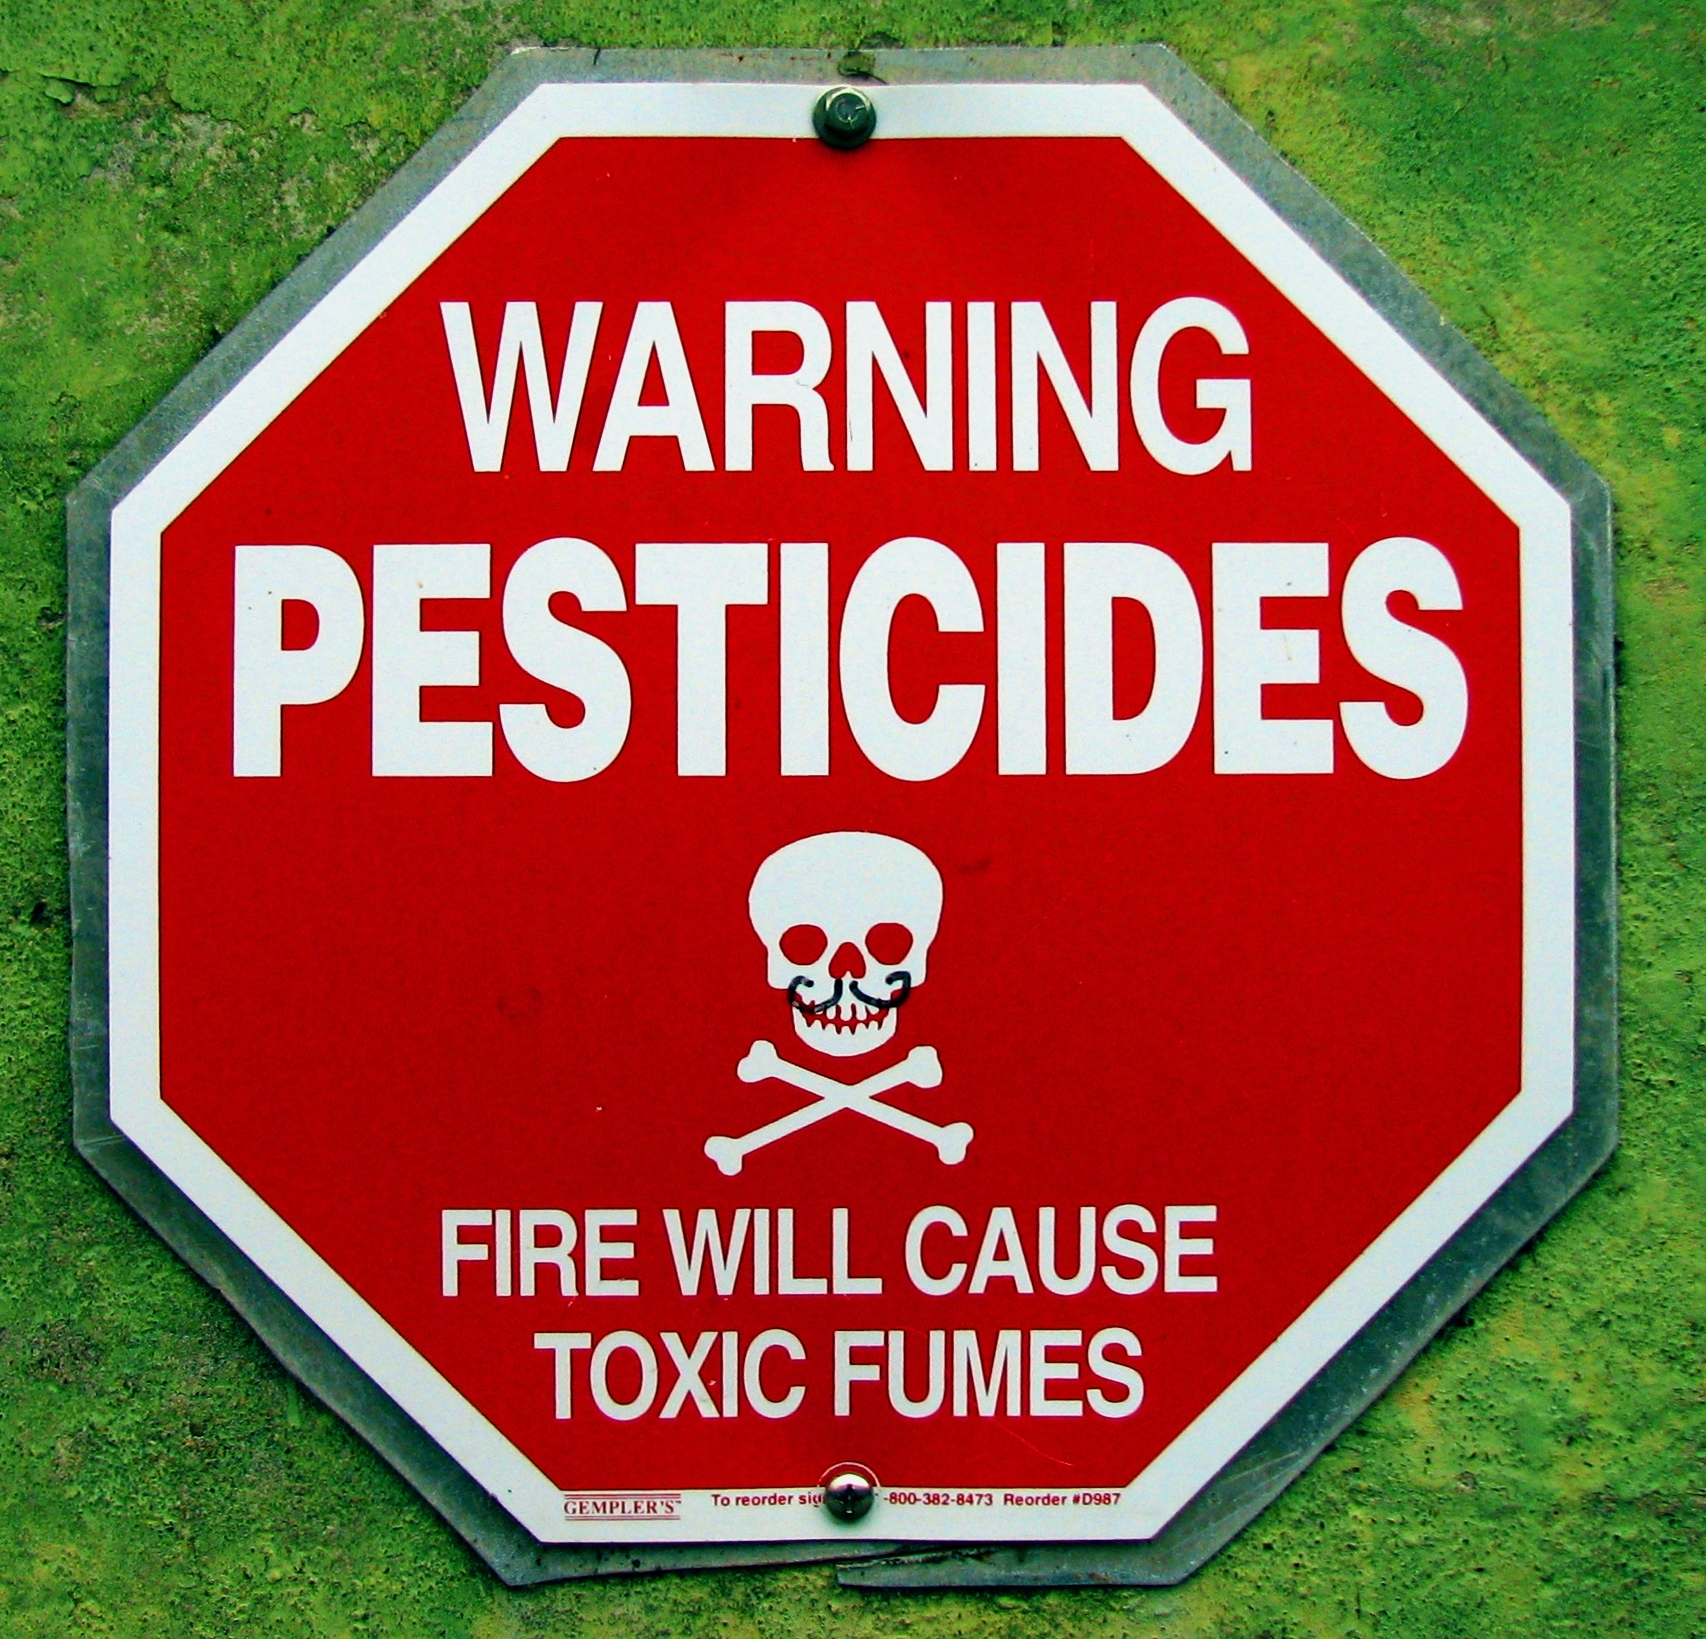 Monsanto’s Tricks – The Greens’ video on the Monsanto-documents